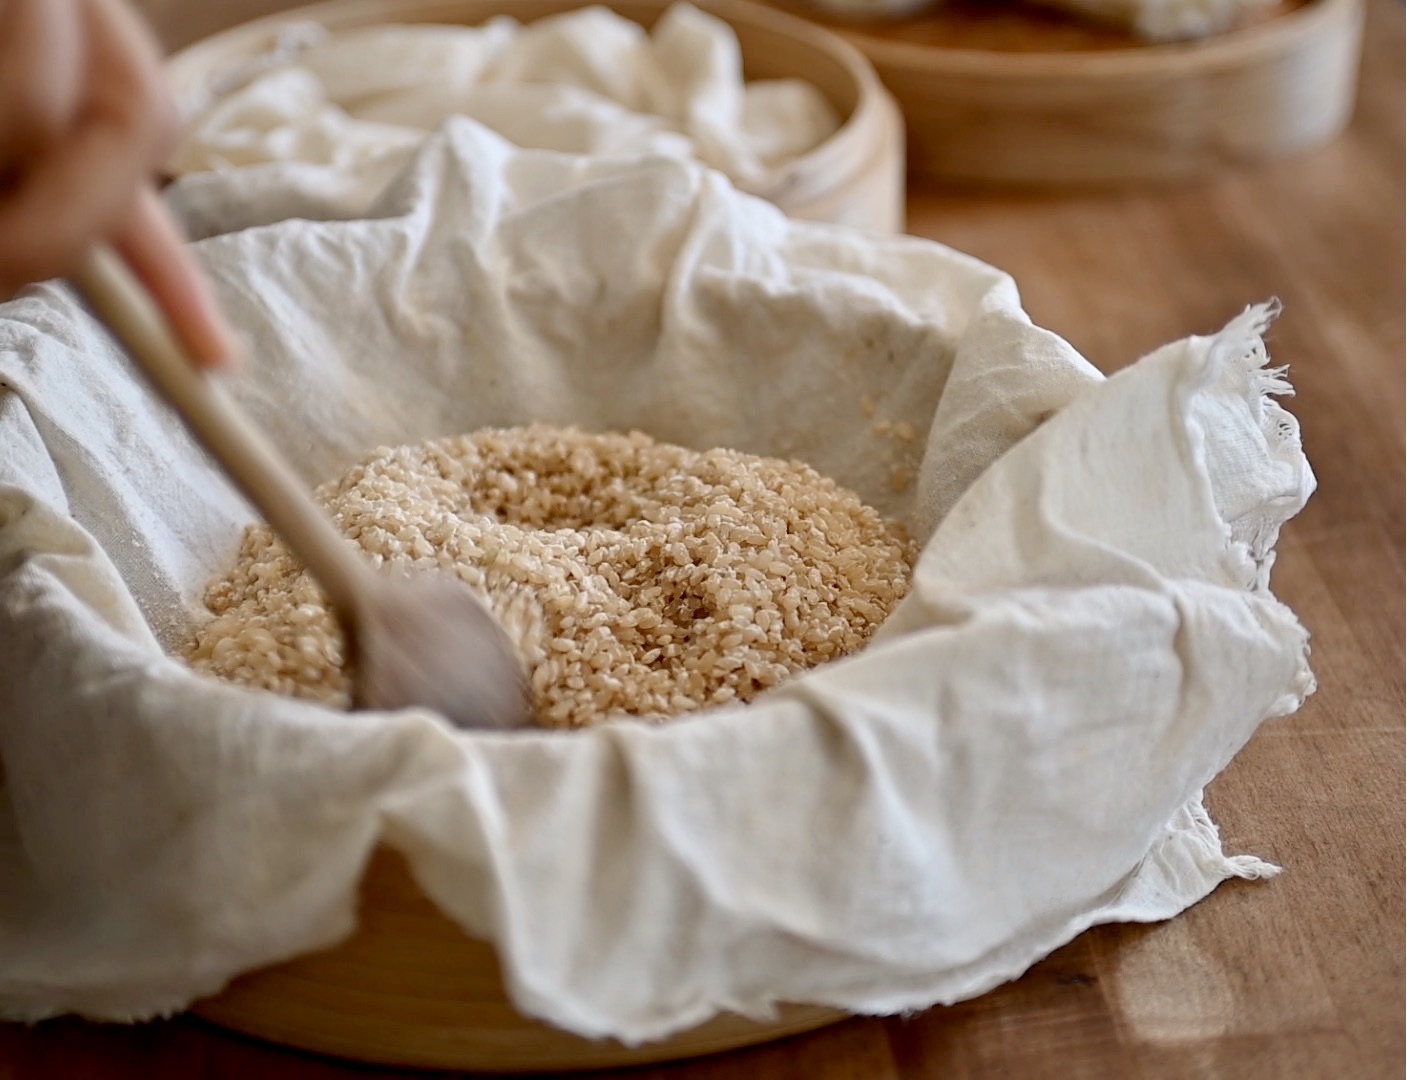 stir the rice mixture each day